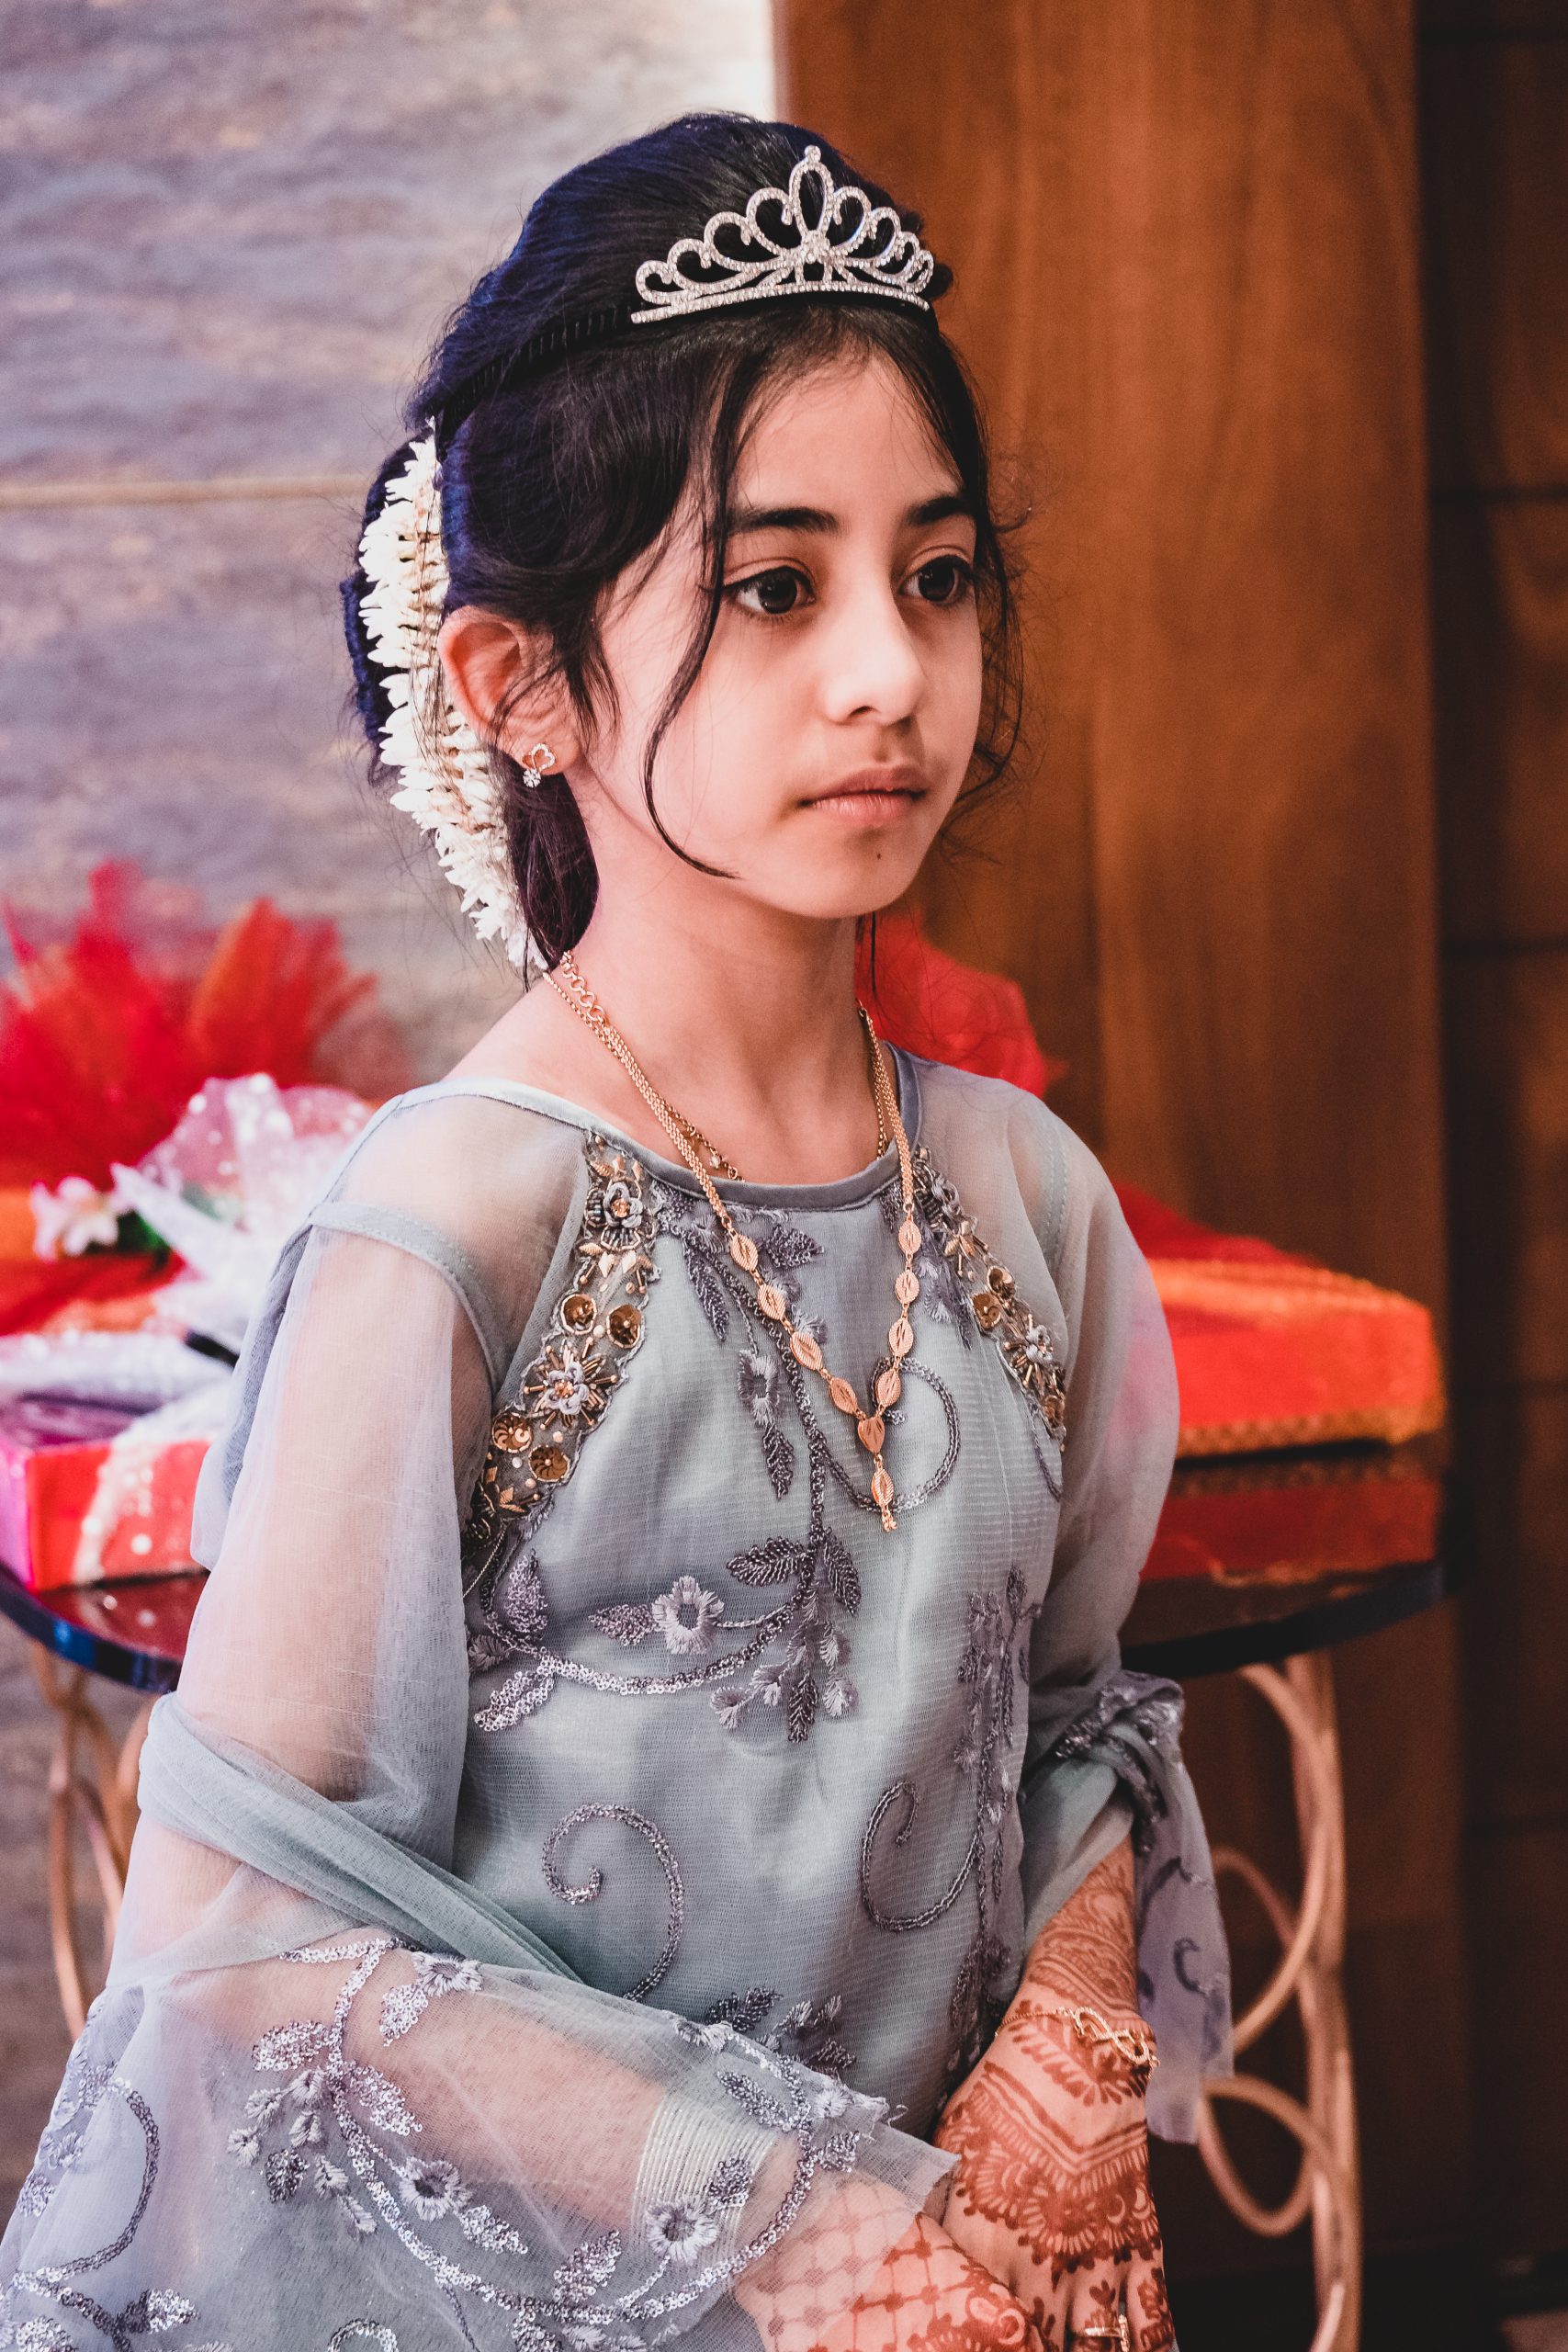 A stylish Indian girl